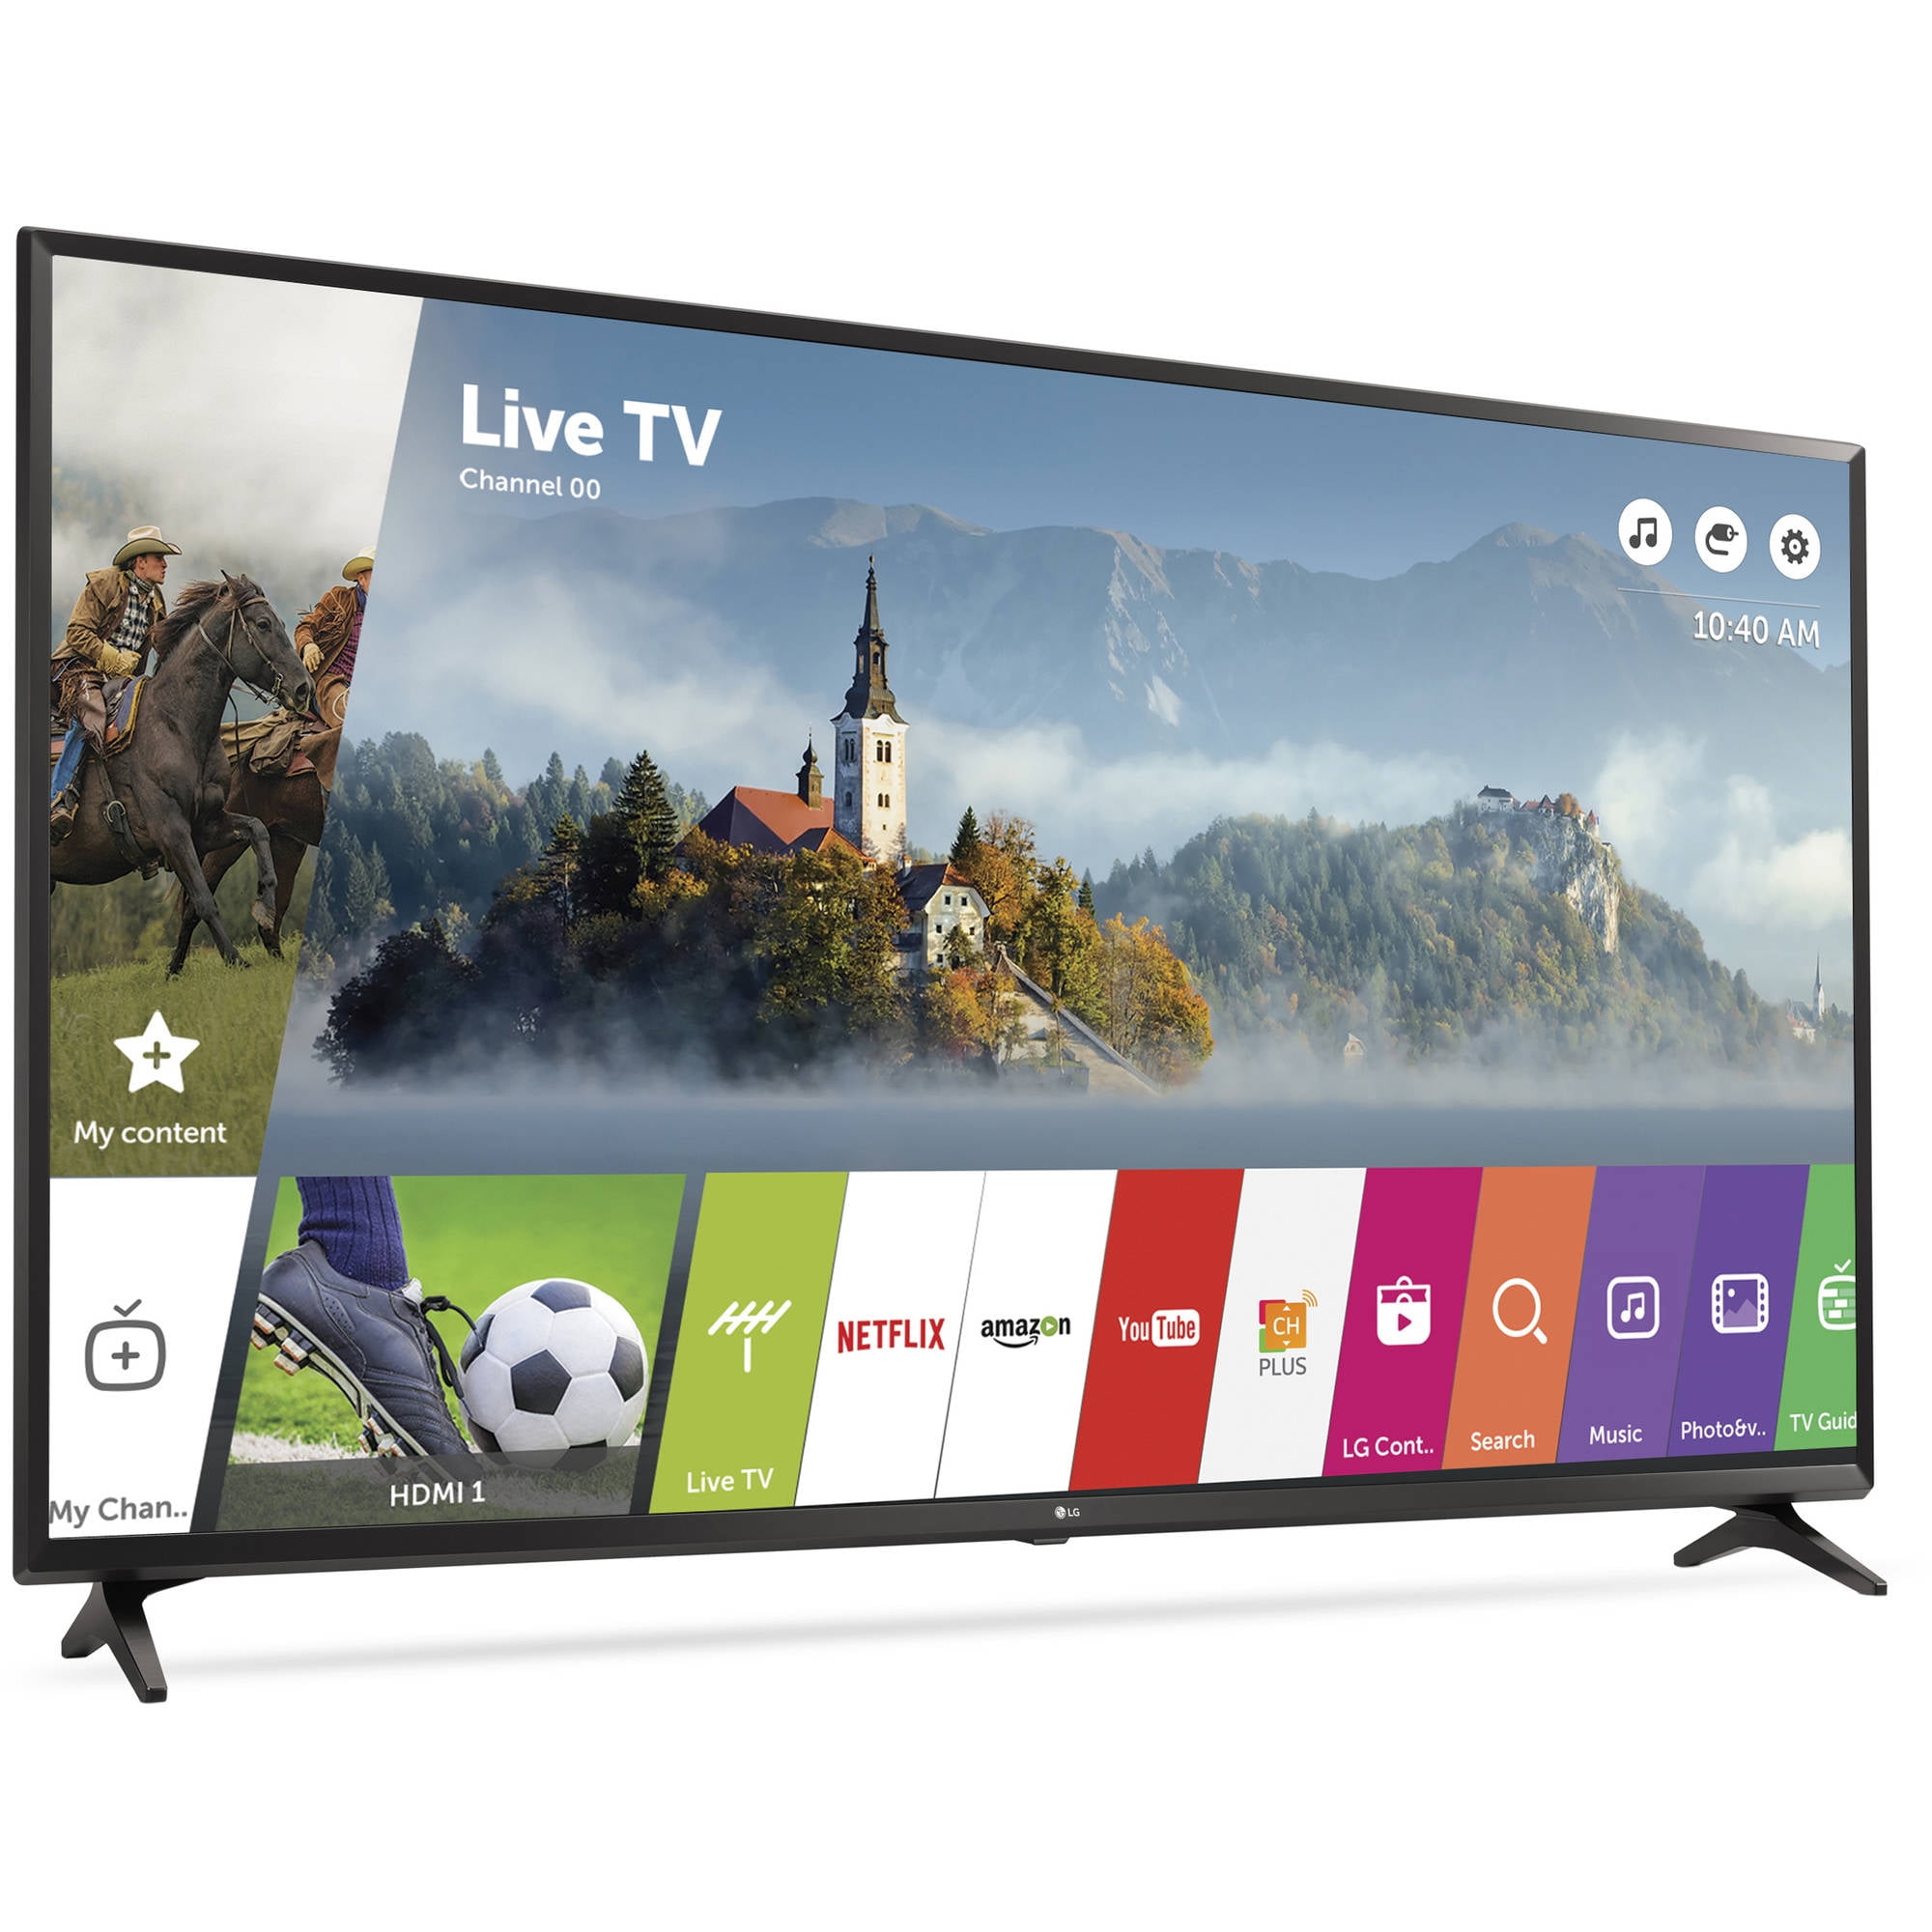 LG 65UN71006LC SMART TV UHD 4K - Smart TV con Inteligencia Artificial,  164cm (65''), Procesador Inteligente Quad Core, HDR 10 Pro, HLG, Sonido  Ultra Surround, LED [Clase de eficiencia energética A]